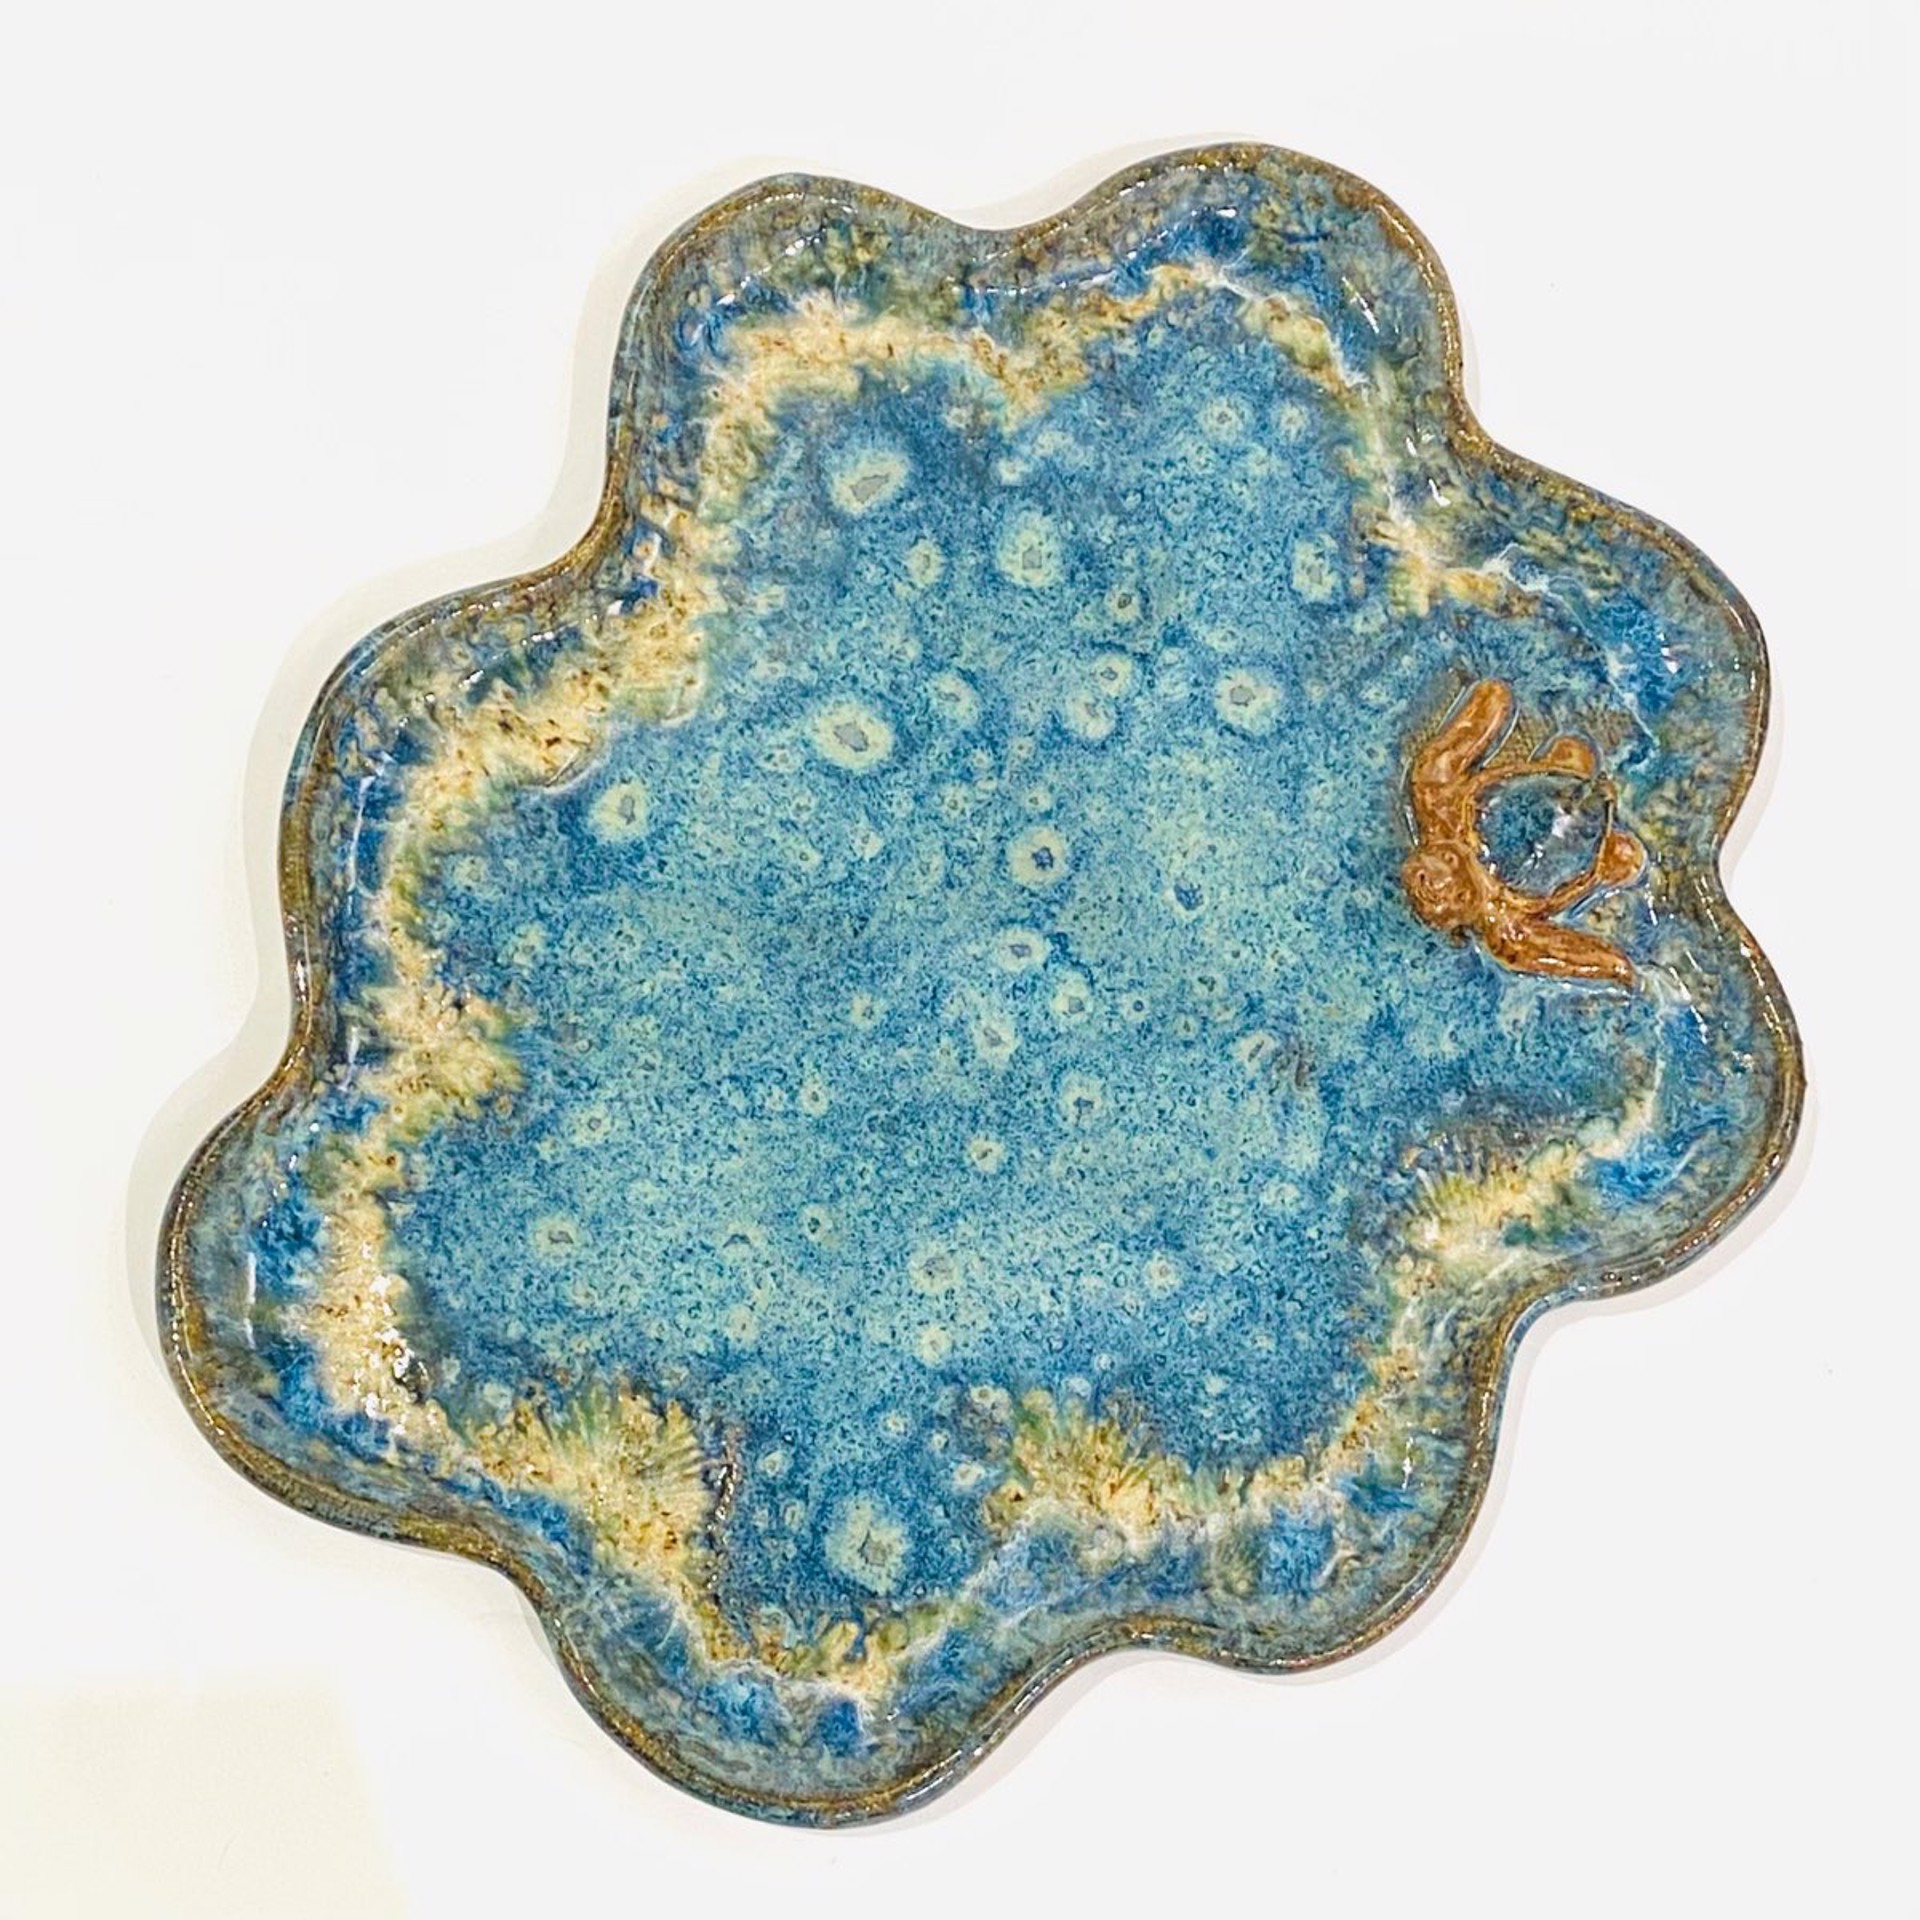 LG22-922 Medium Plate with Turtle (Blue Glaze) by Jim & Steffi Logan